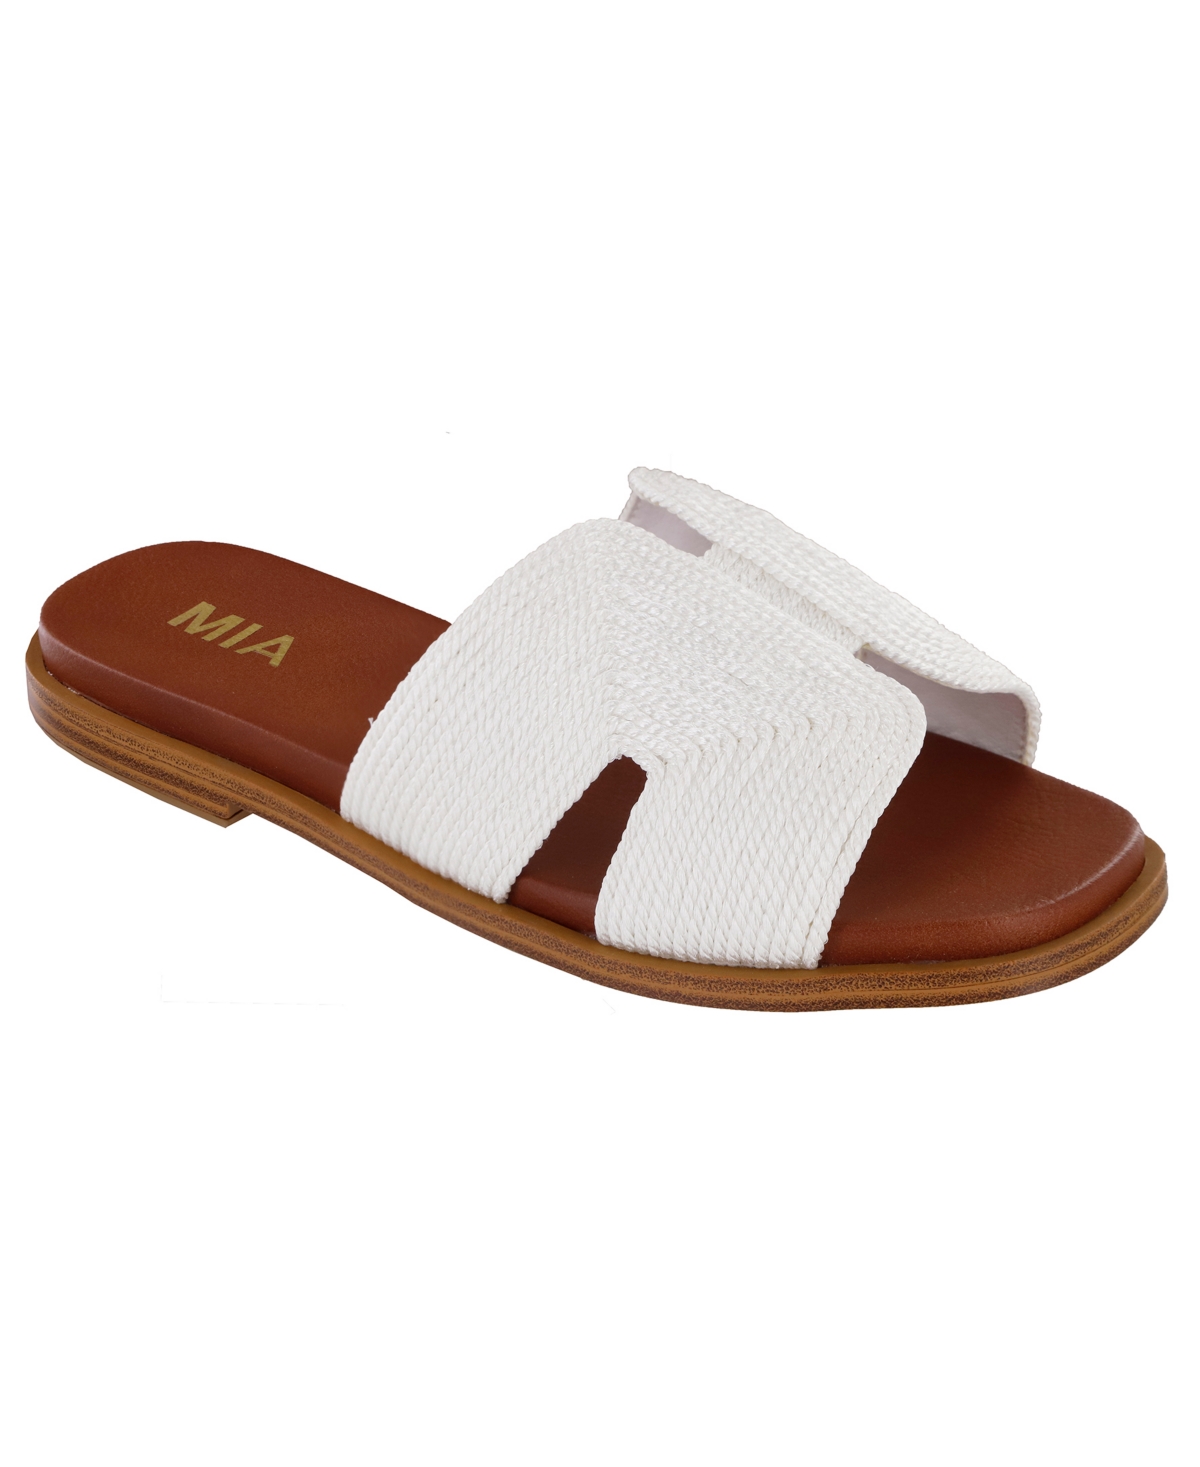 Women's Dia Flat Sandals - White